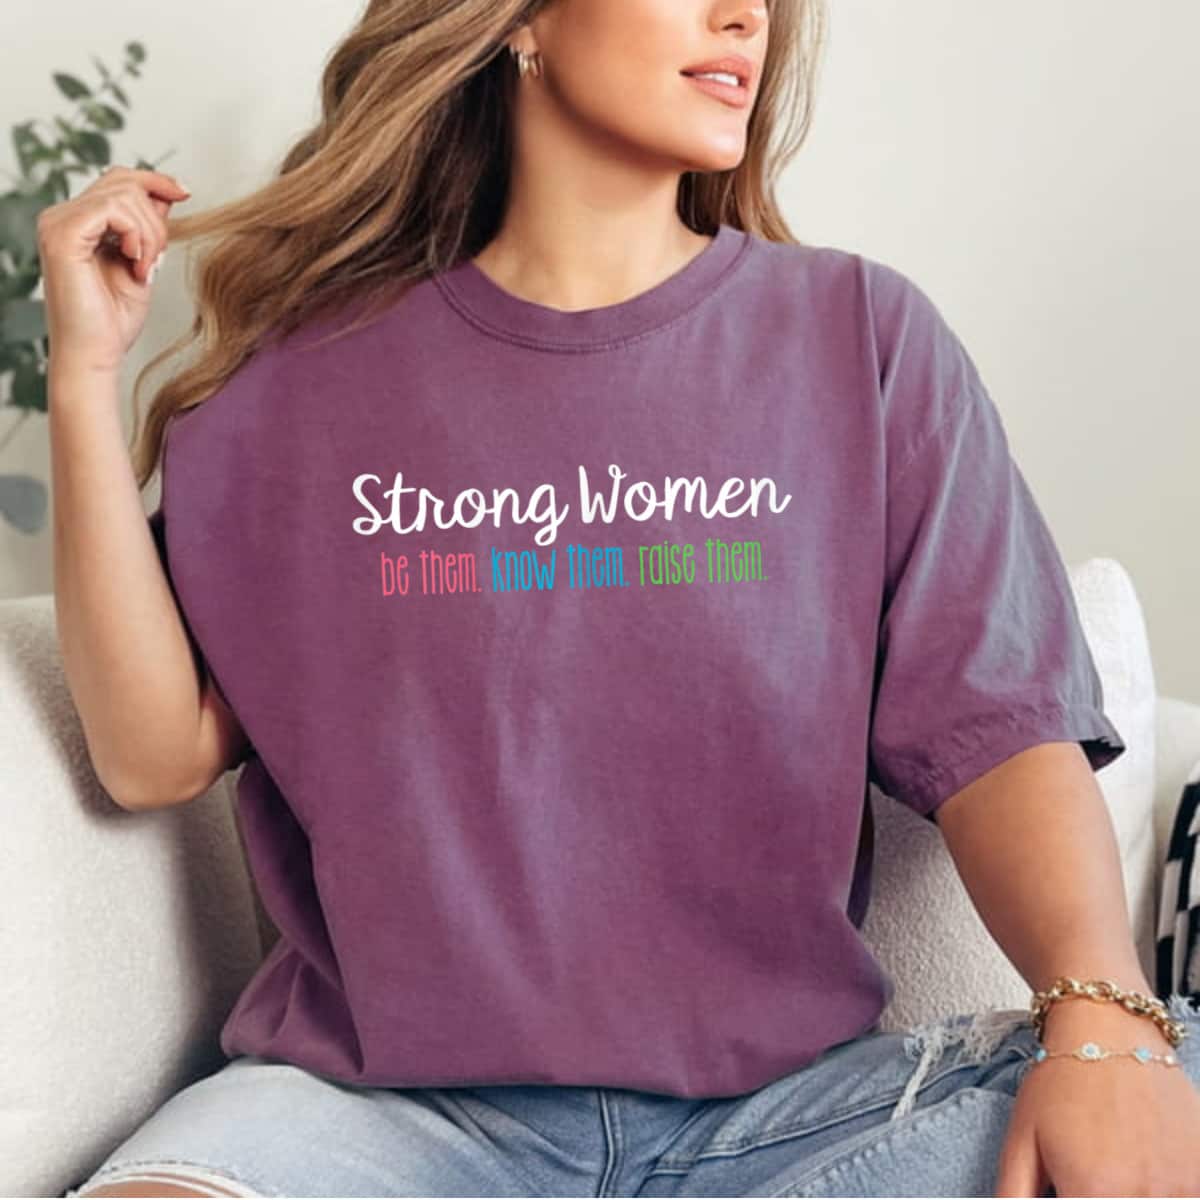 Strong Women Be Them Know Them Raise Them Feminist T-Shirt